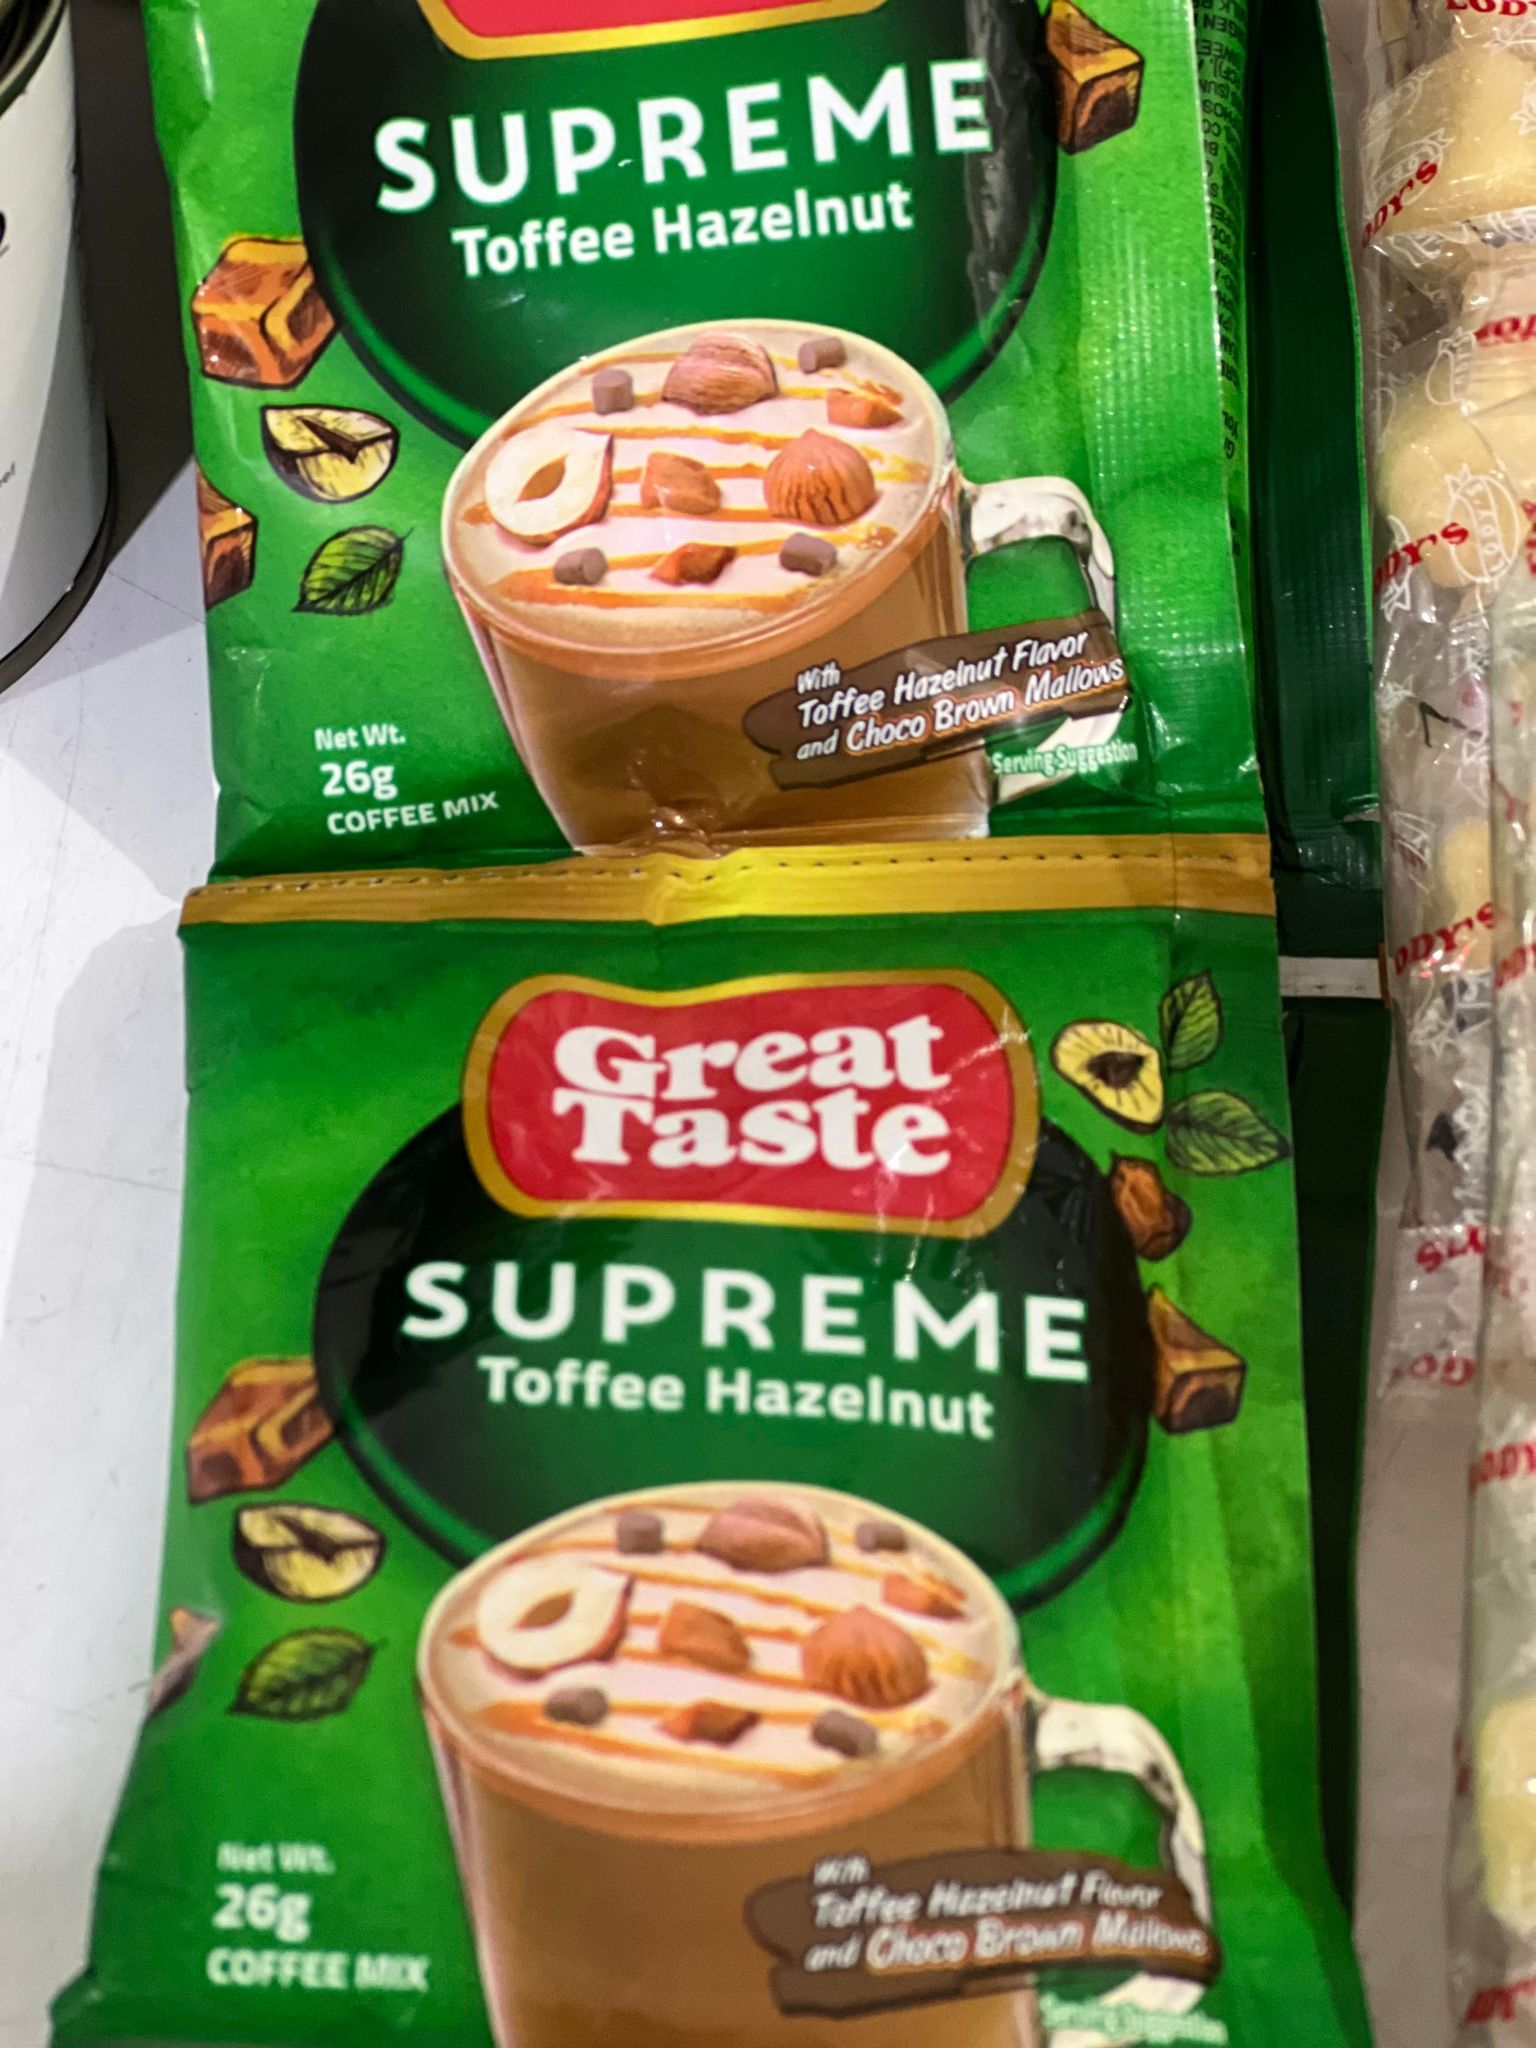 Great Taste Supreme Toffee Hazelnut